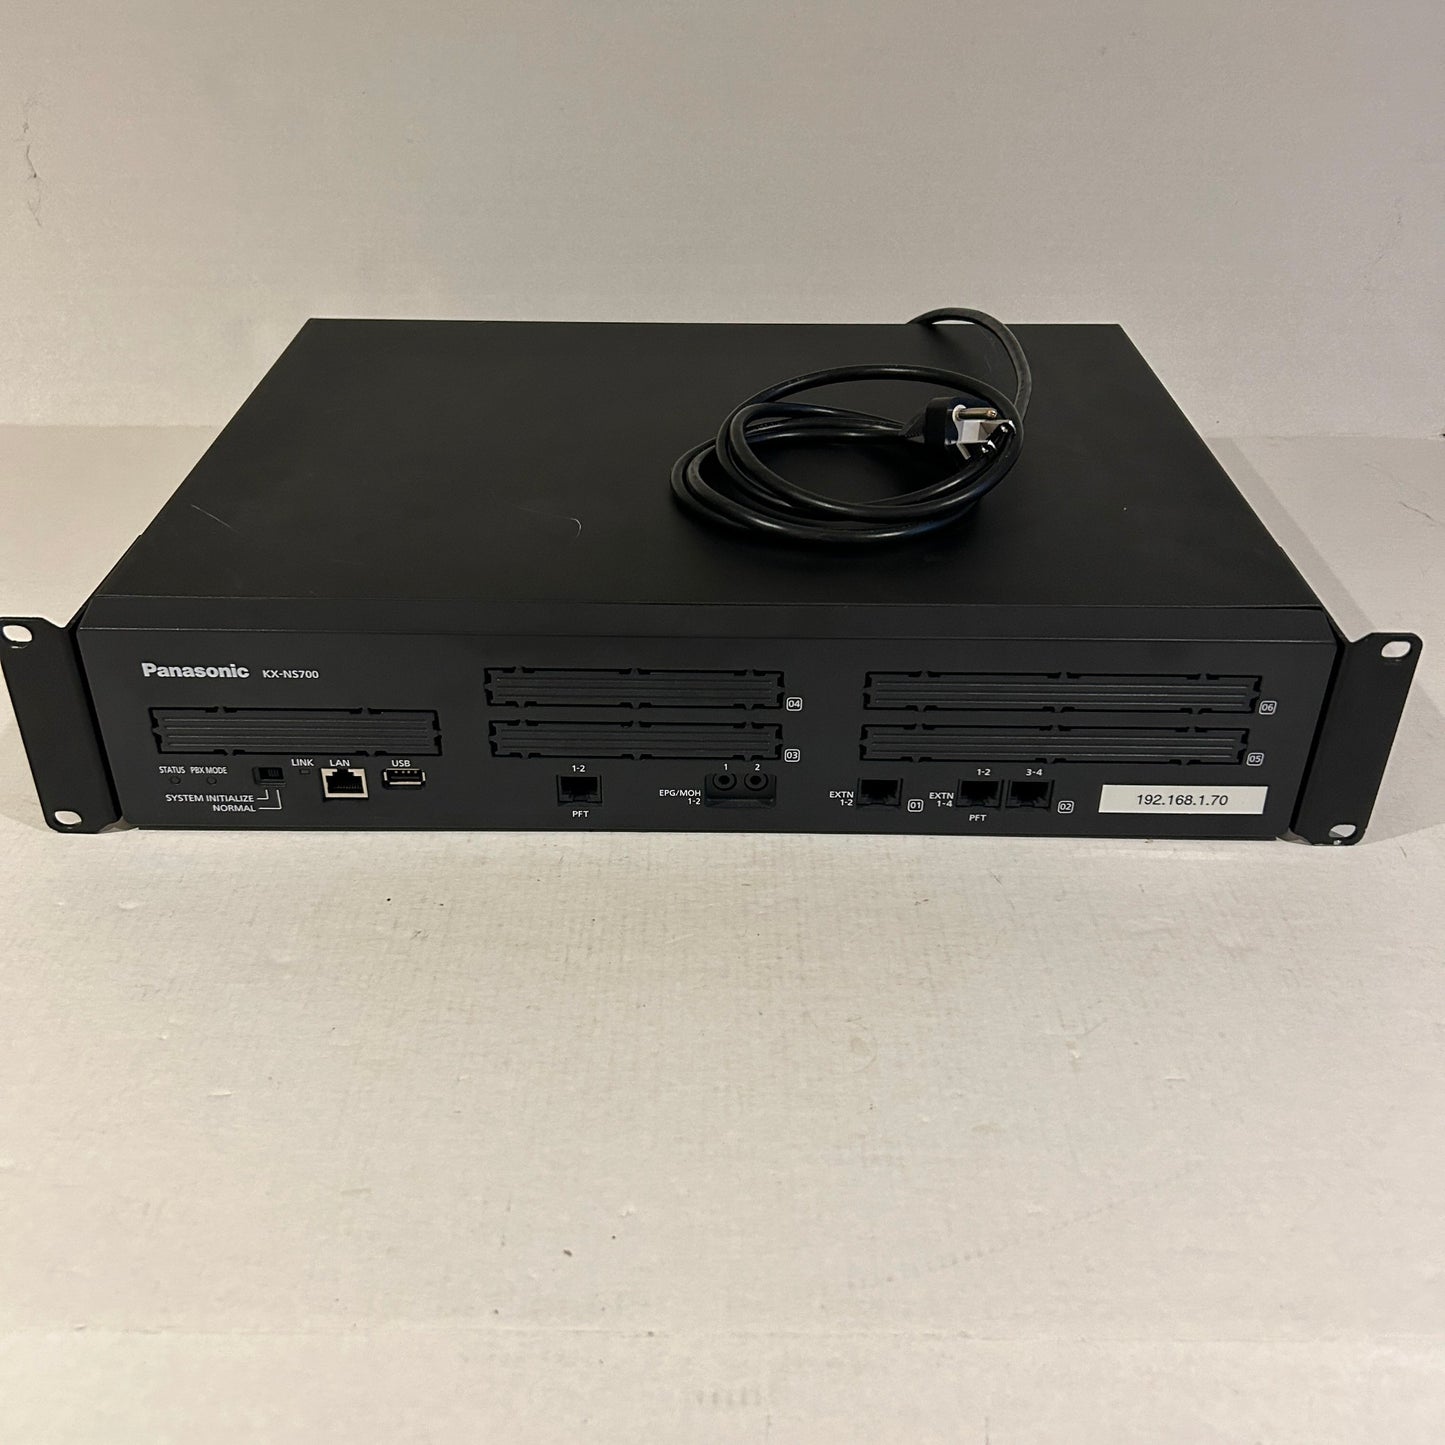 Panasonic KX-NS700 IP PBX Compact Hybrid Communication Platform